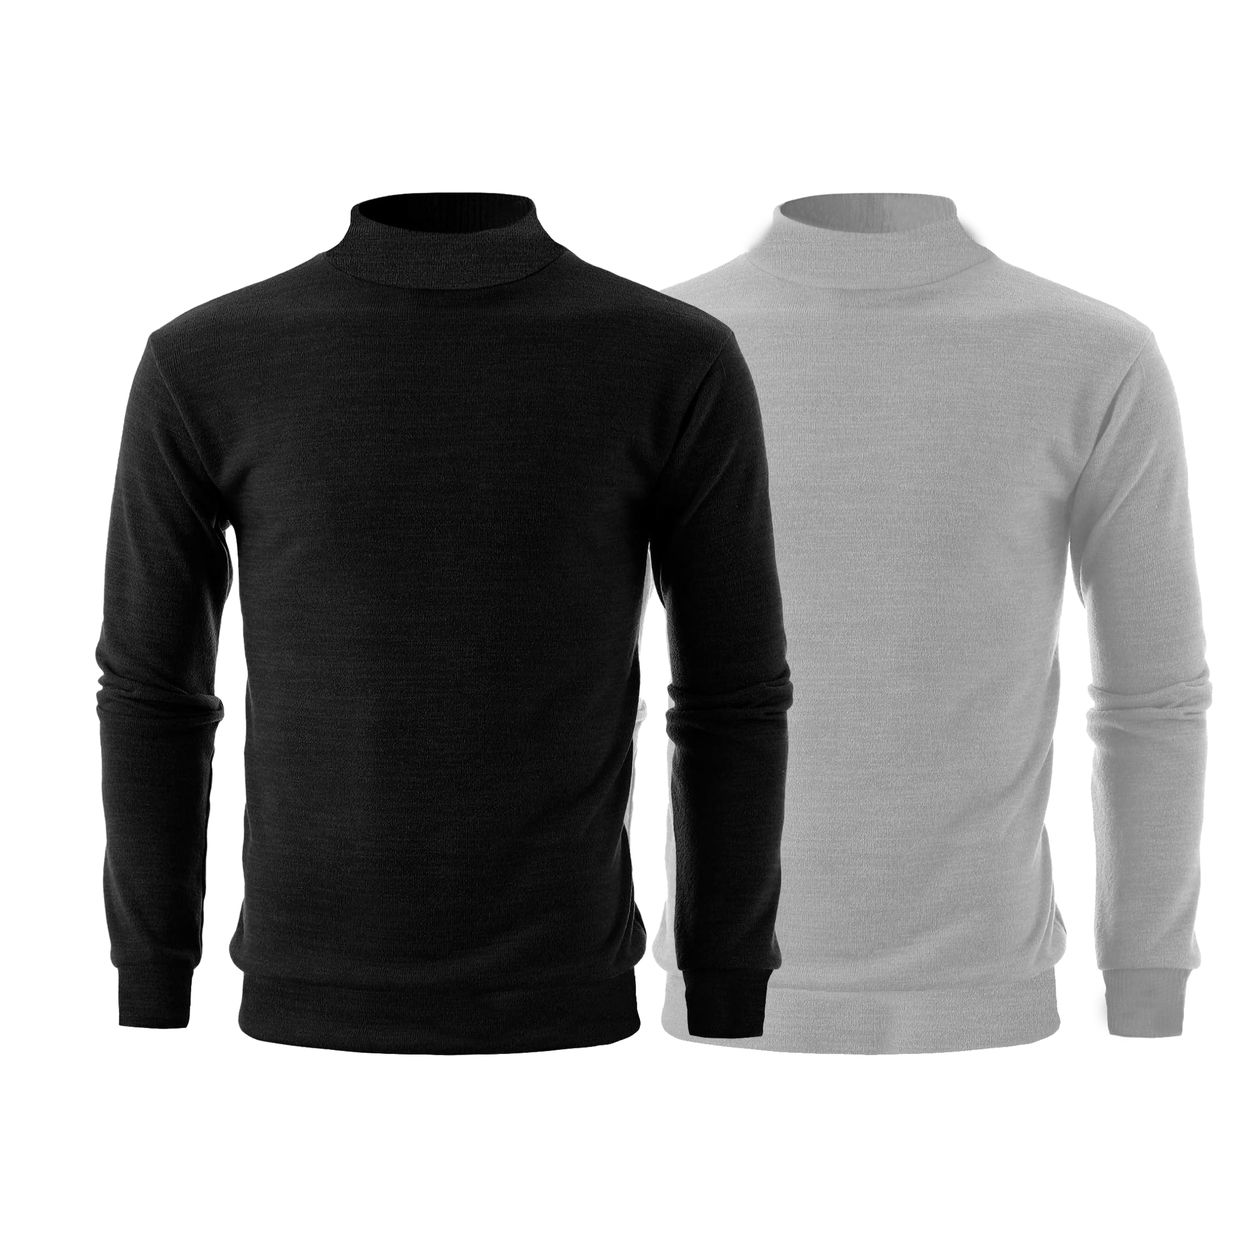 2-Pack: Men's Winter Warm Cozy Knit Slim Fit Mock Neck Sweater - Black& Burgundy, Large